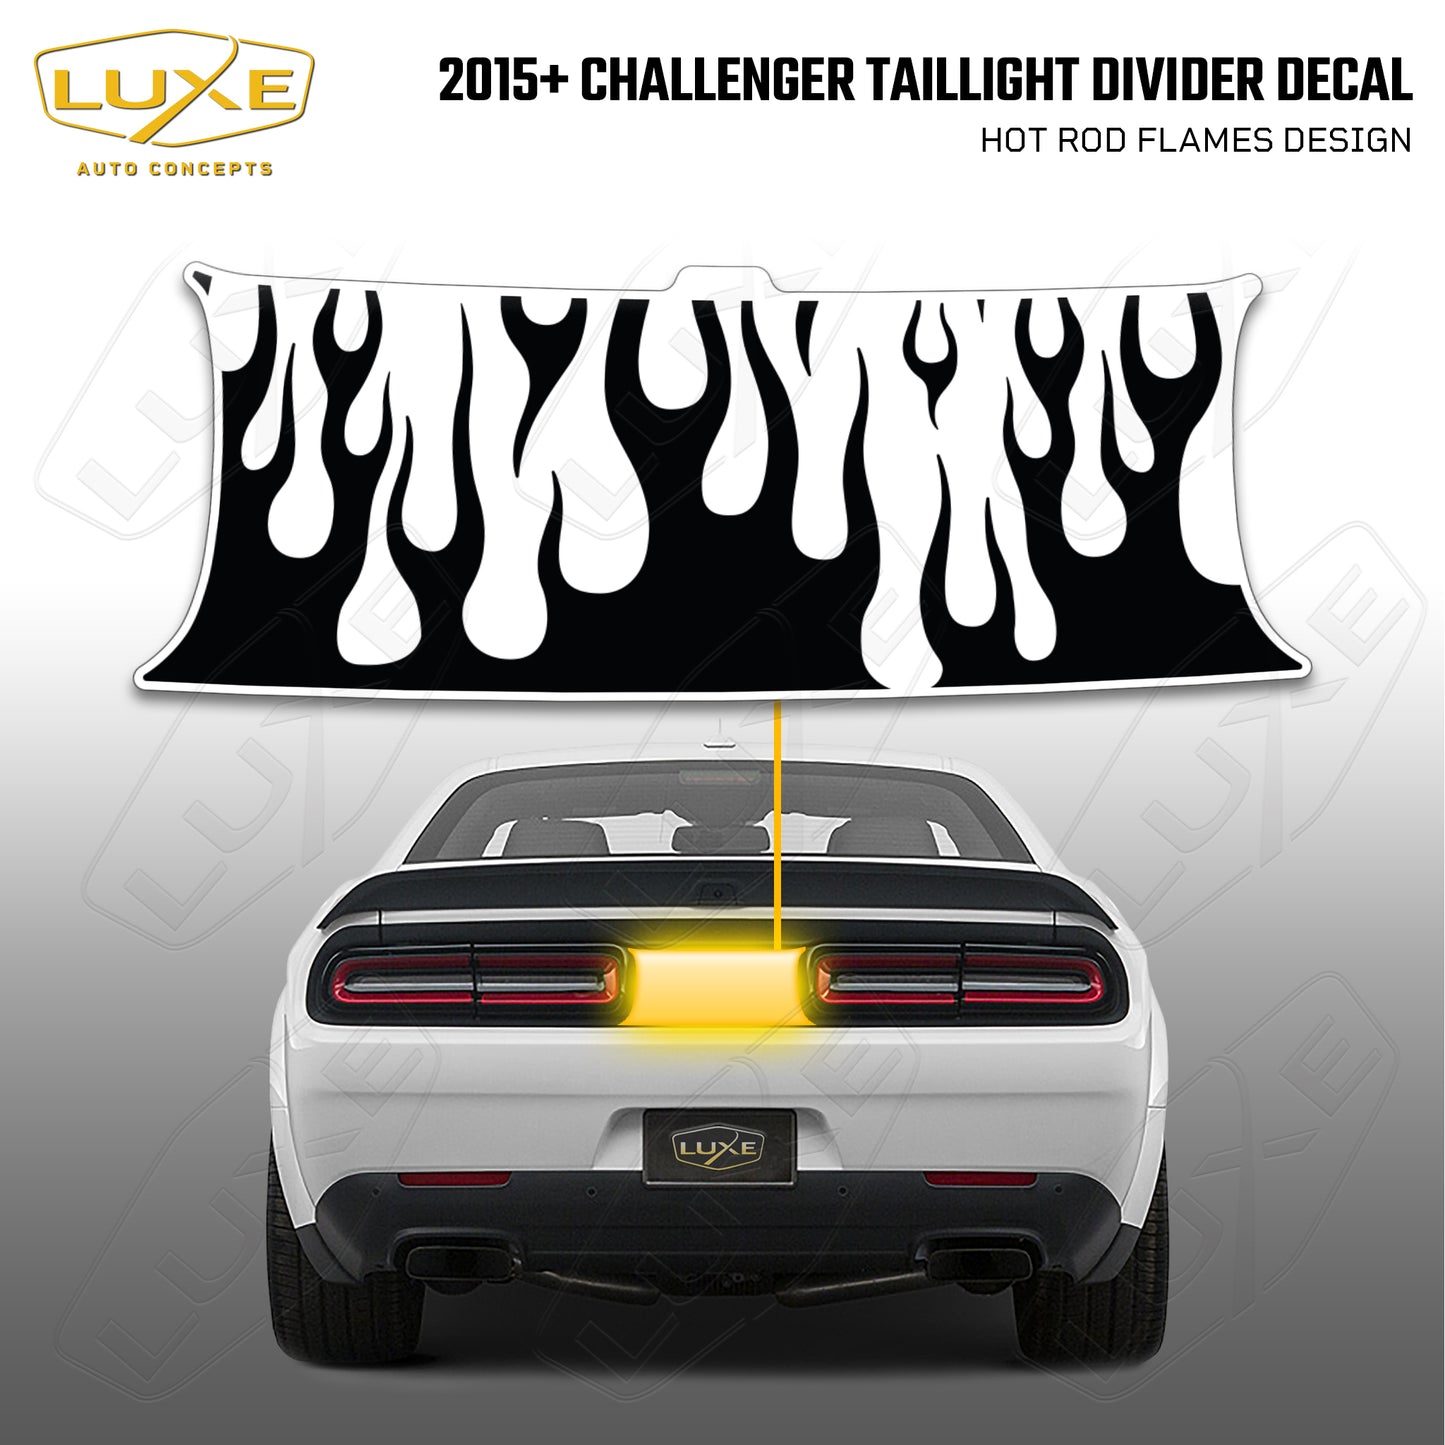 2015+ Challenger Taillight Center Divider Decal - Hot Rod Flames Design